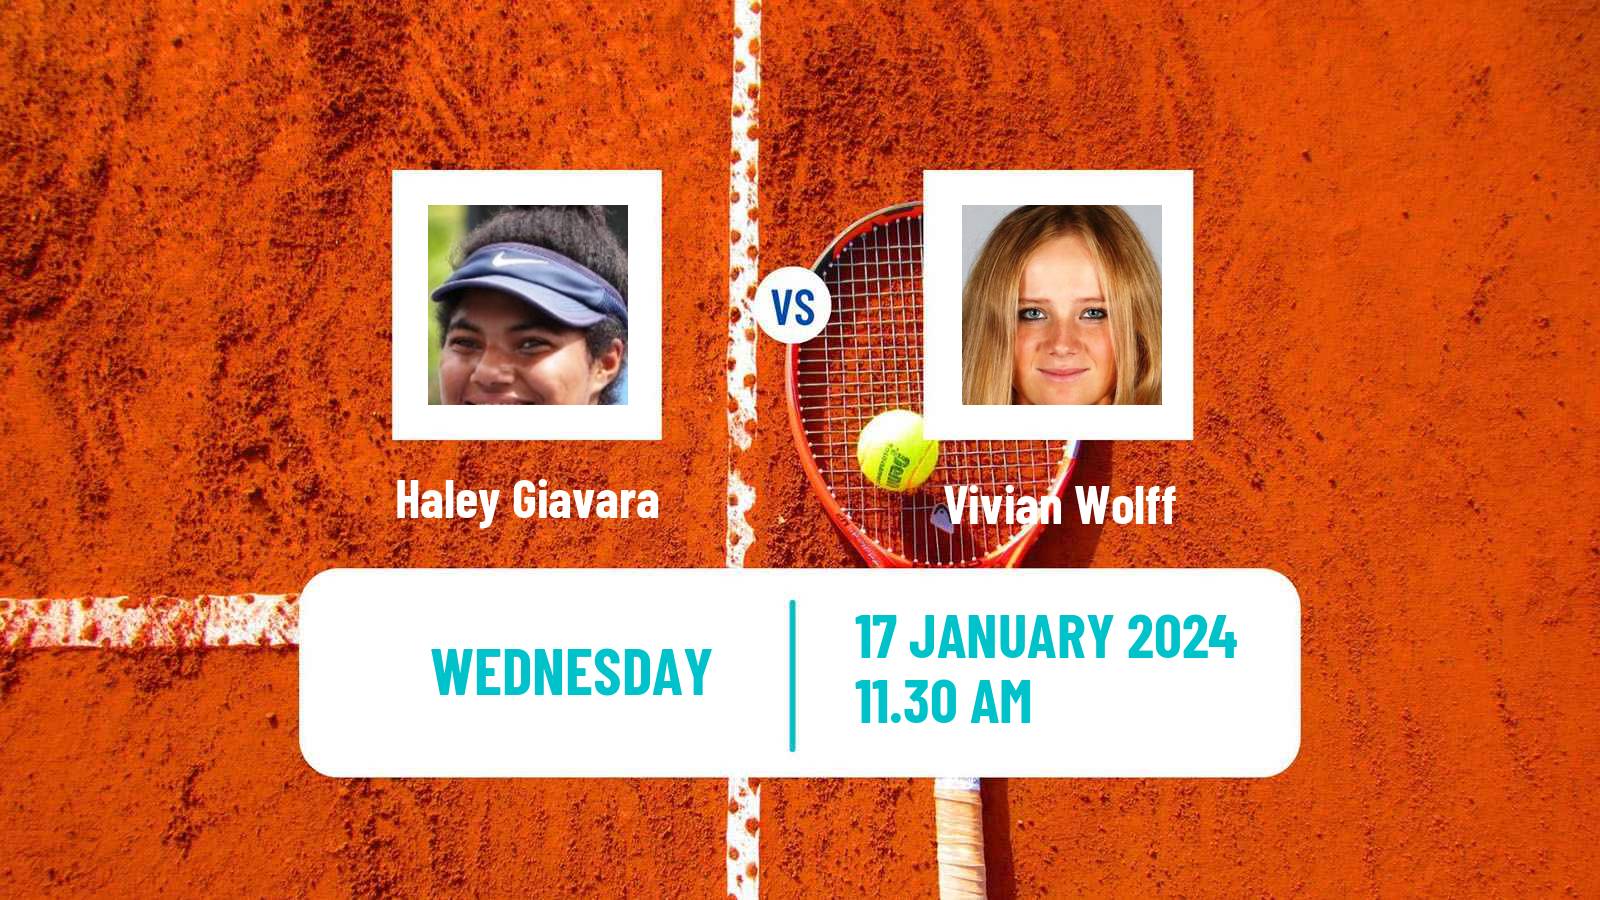 Tennis ITF W35 Naples Fl 2 Women Haley Giavara - Vivian Wolff